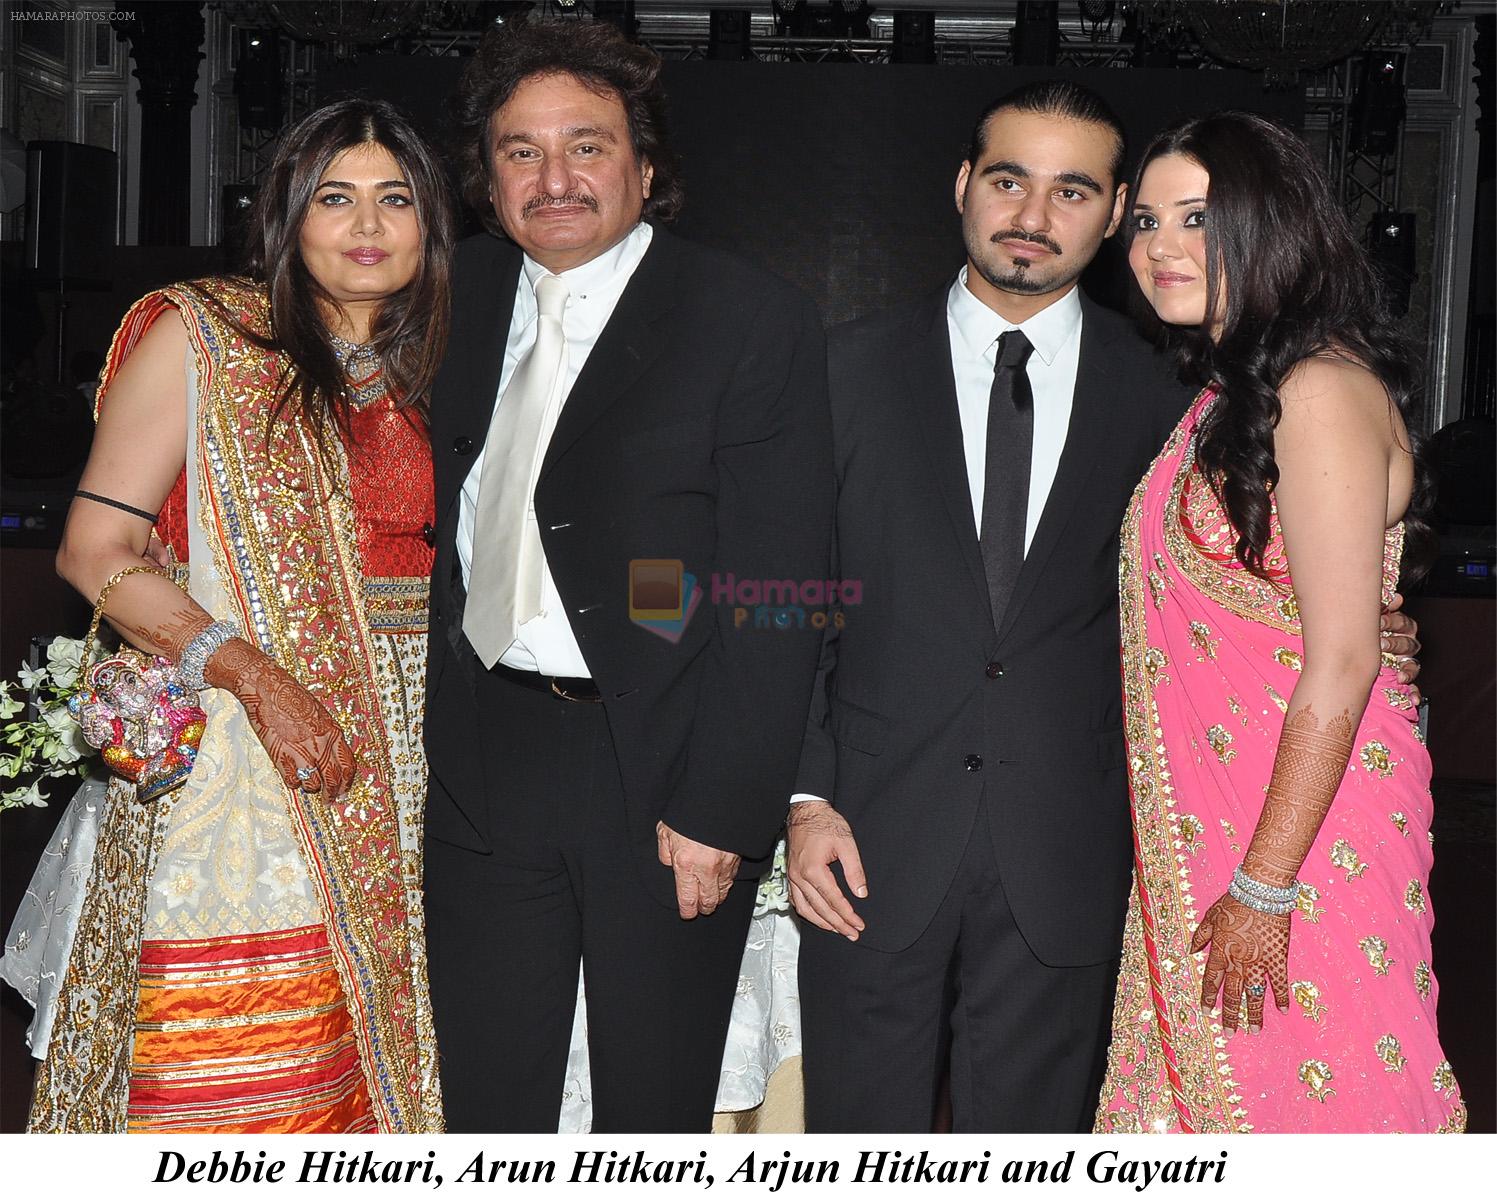 Debbie Hitkari, Arun Hitkari, Arjun Hitkari and Gayatri at the Engagement ceremony of Arjun Hitkari with Gayatri on 19th April 2012